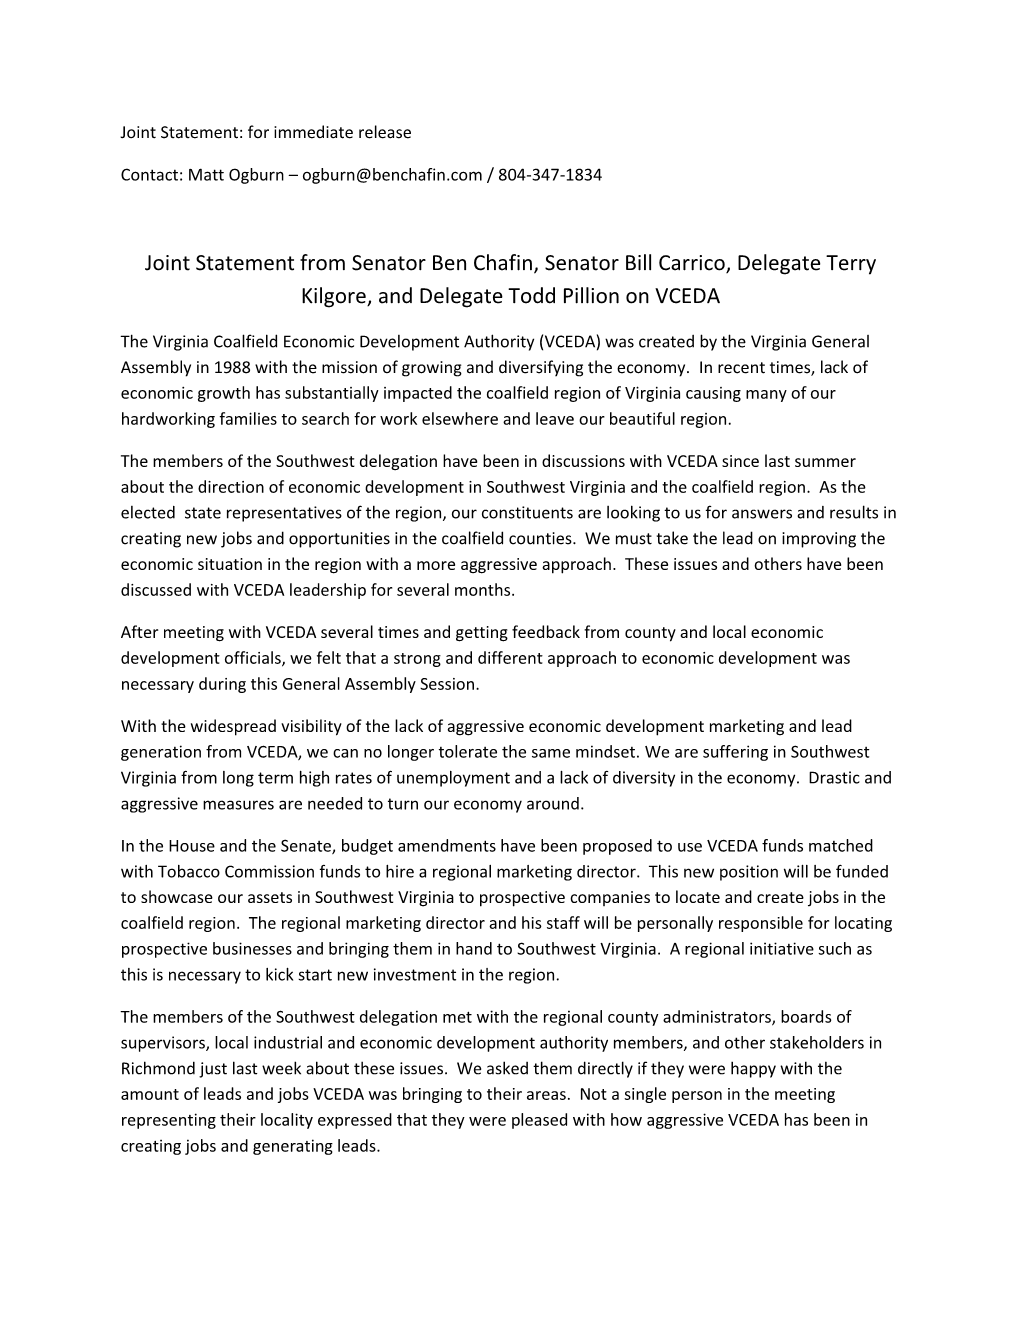 Joint Statement from Senator Ben Chafin, Senator Bill Carrico, Delegate Terry Kilgore, and Delegate Todd Pillion on VCEDA